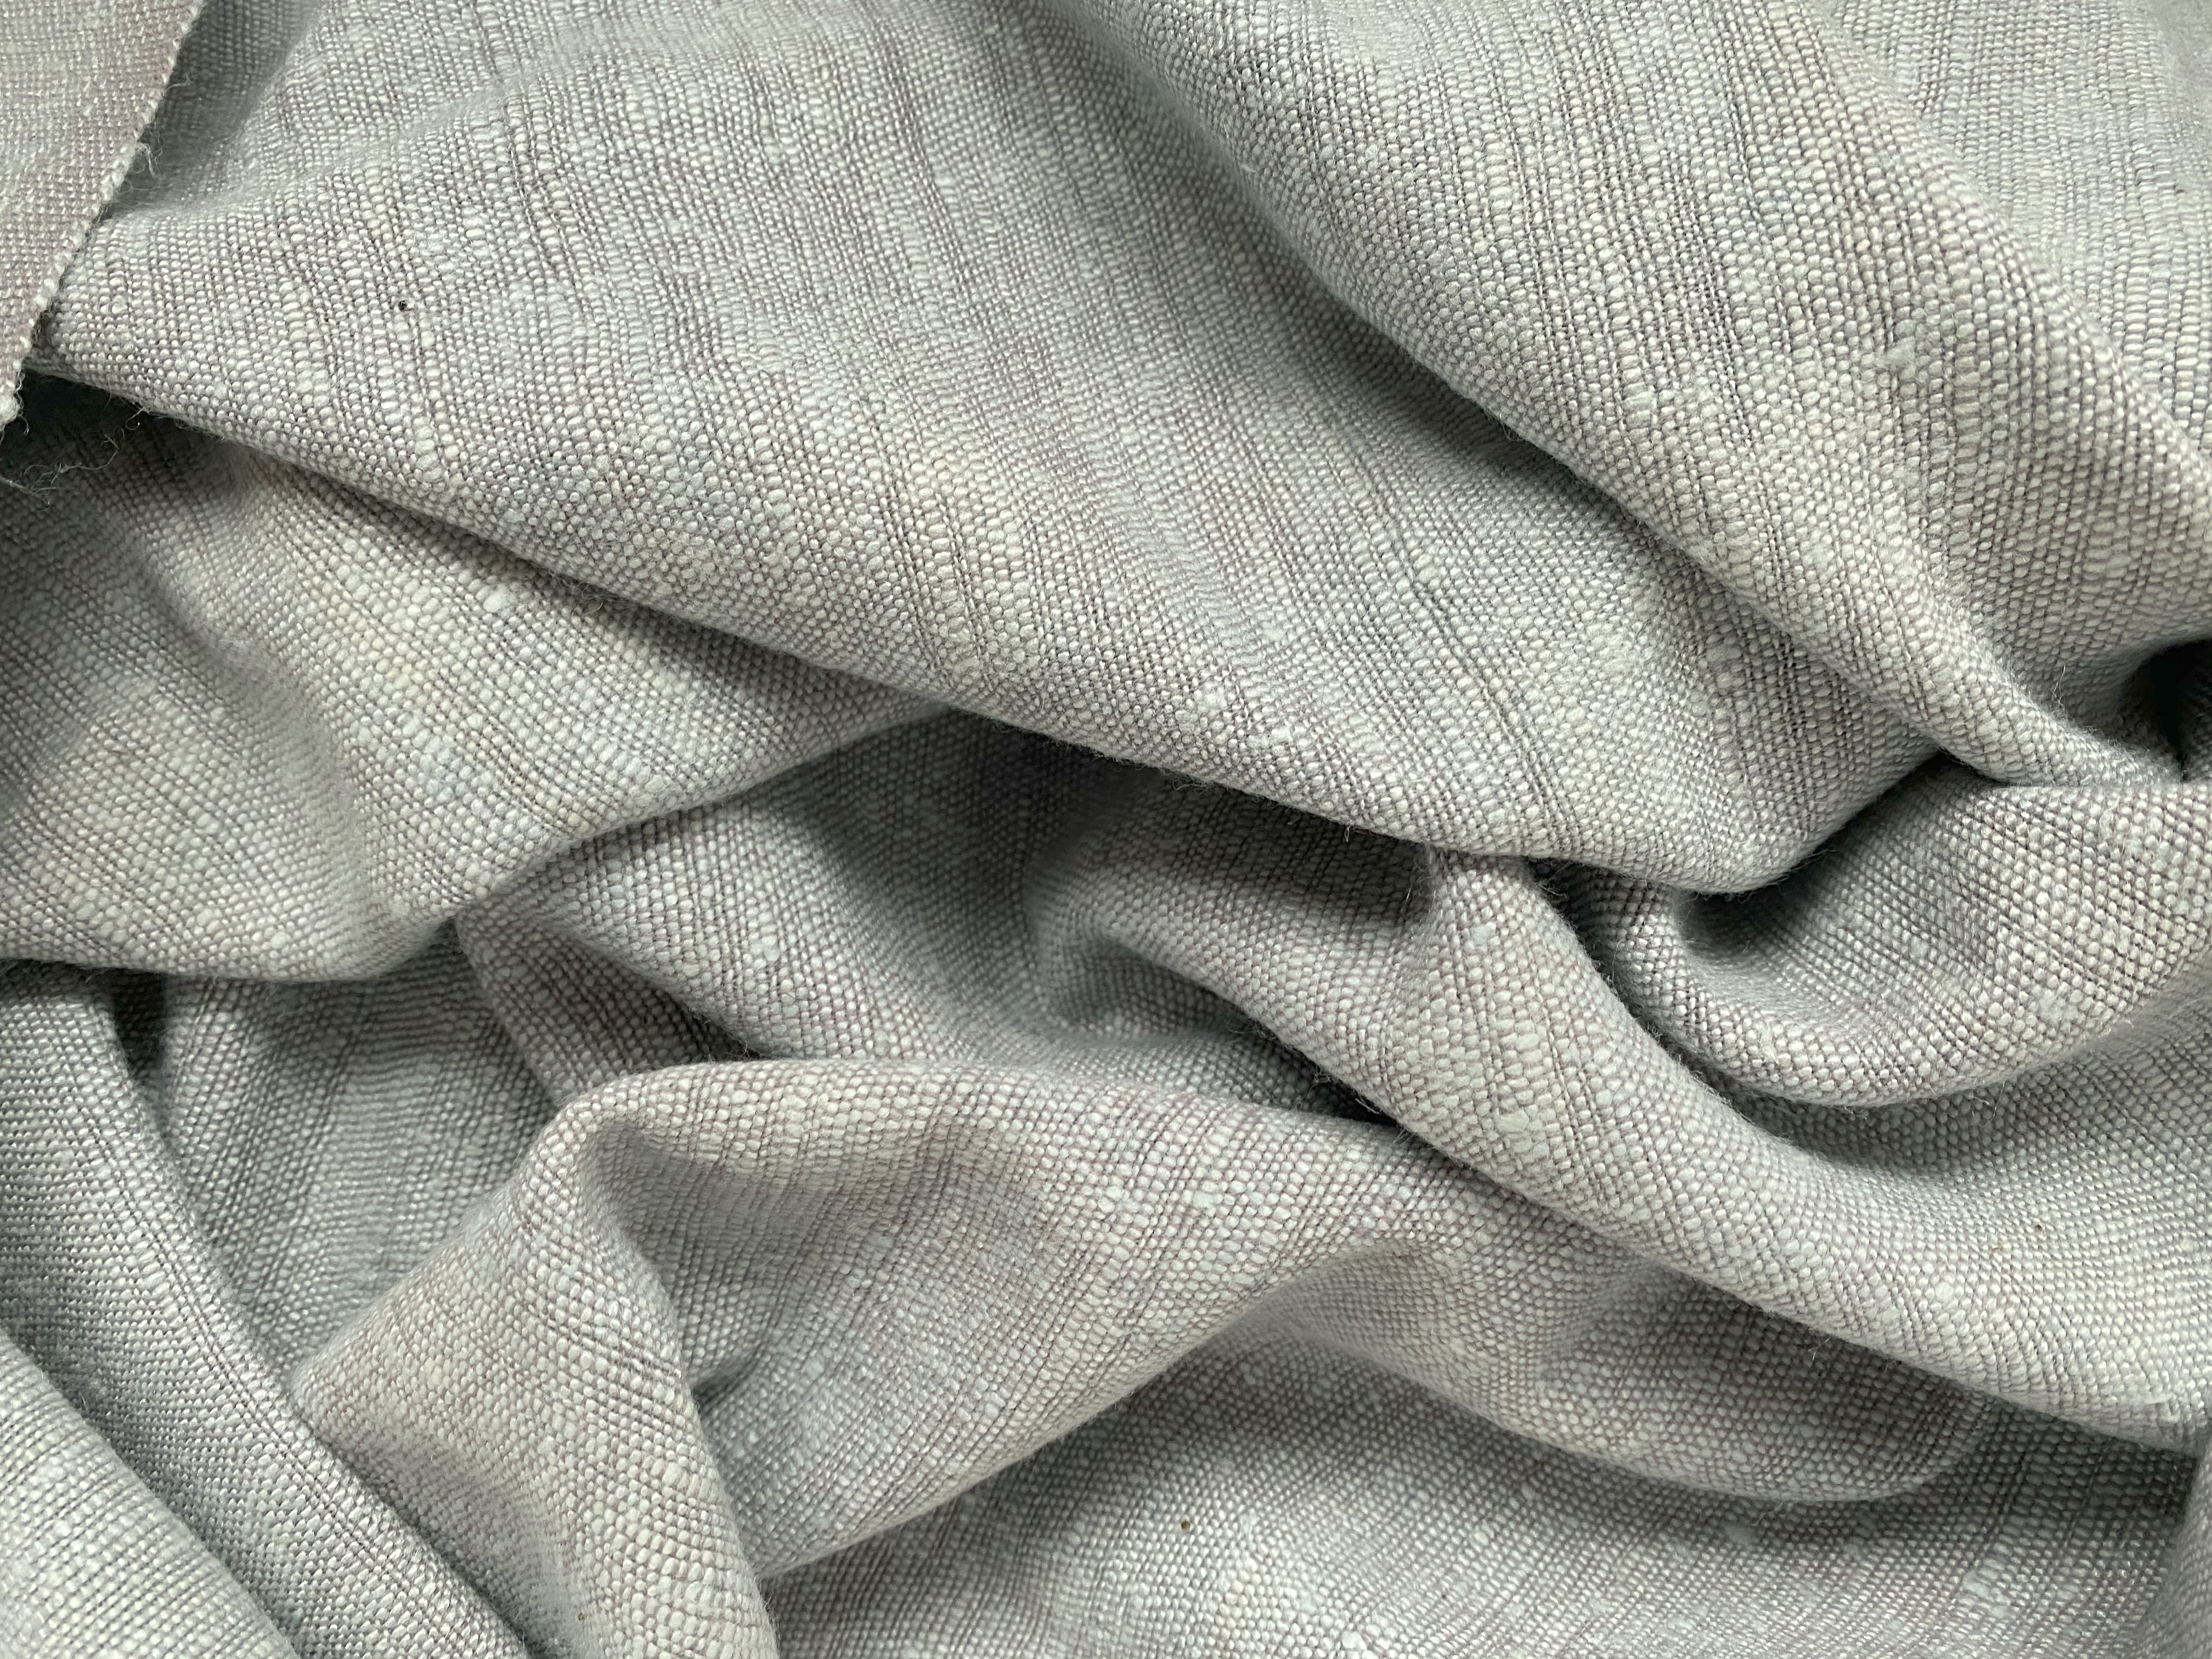 Silk/cotton scarf Noah